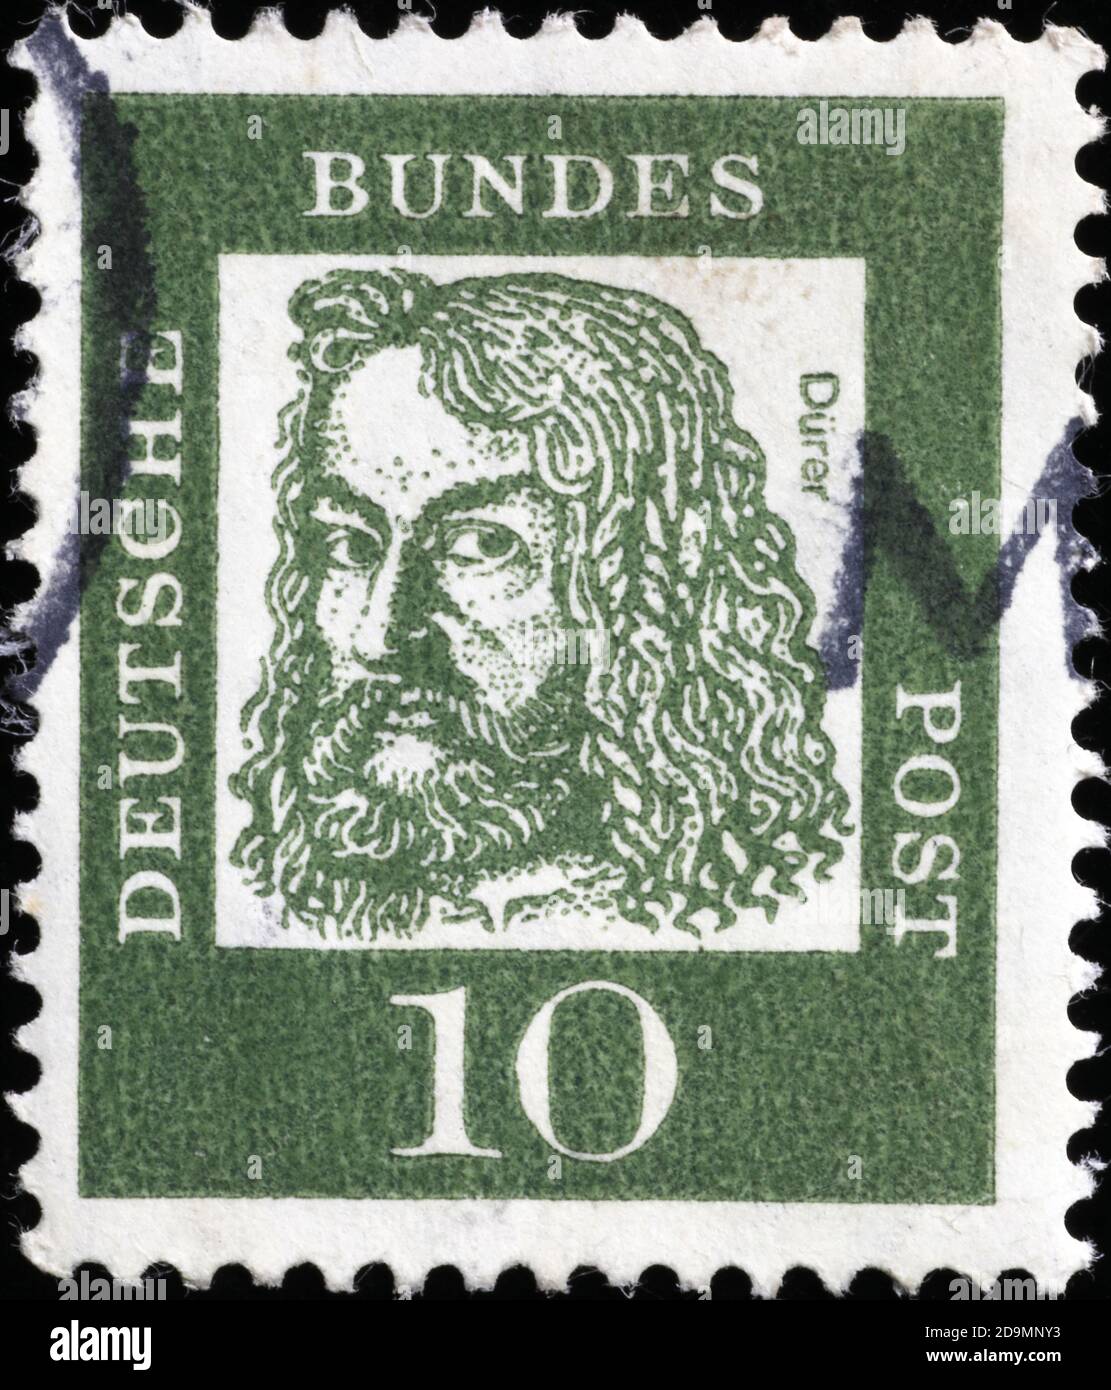 Albrecht Durer sul vecchio francobollo tedesco Foto Stock